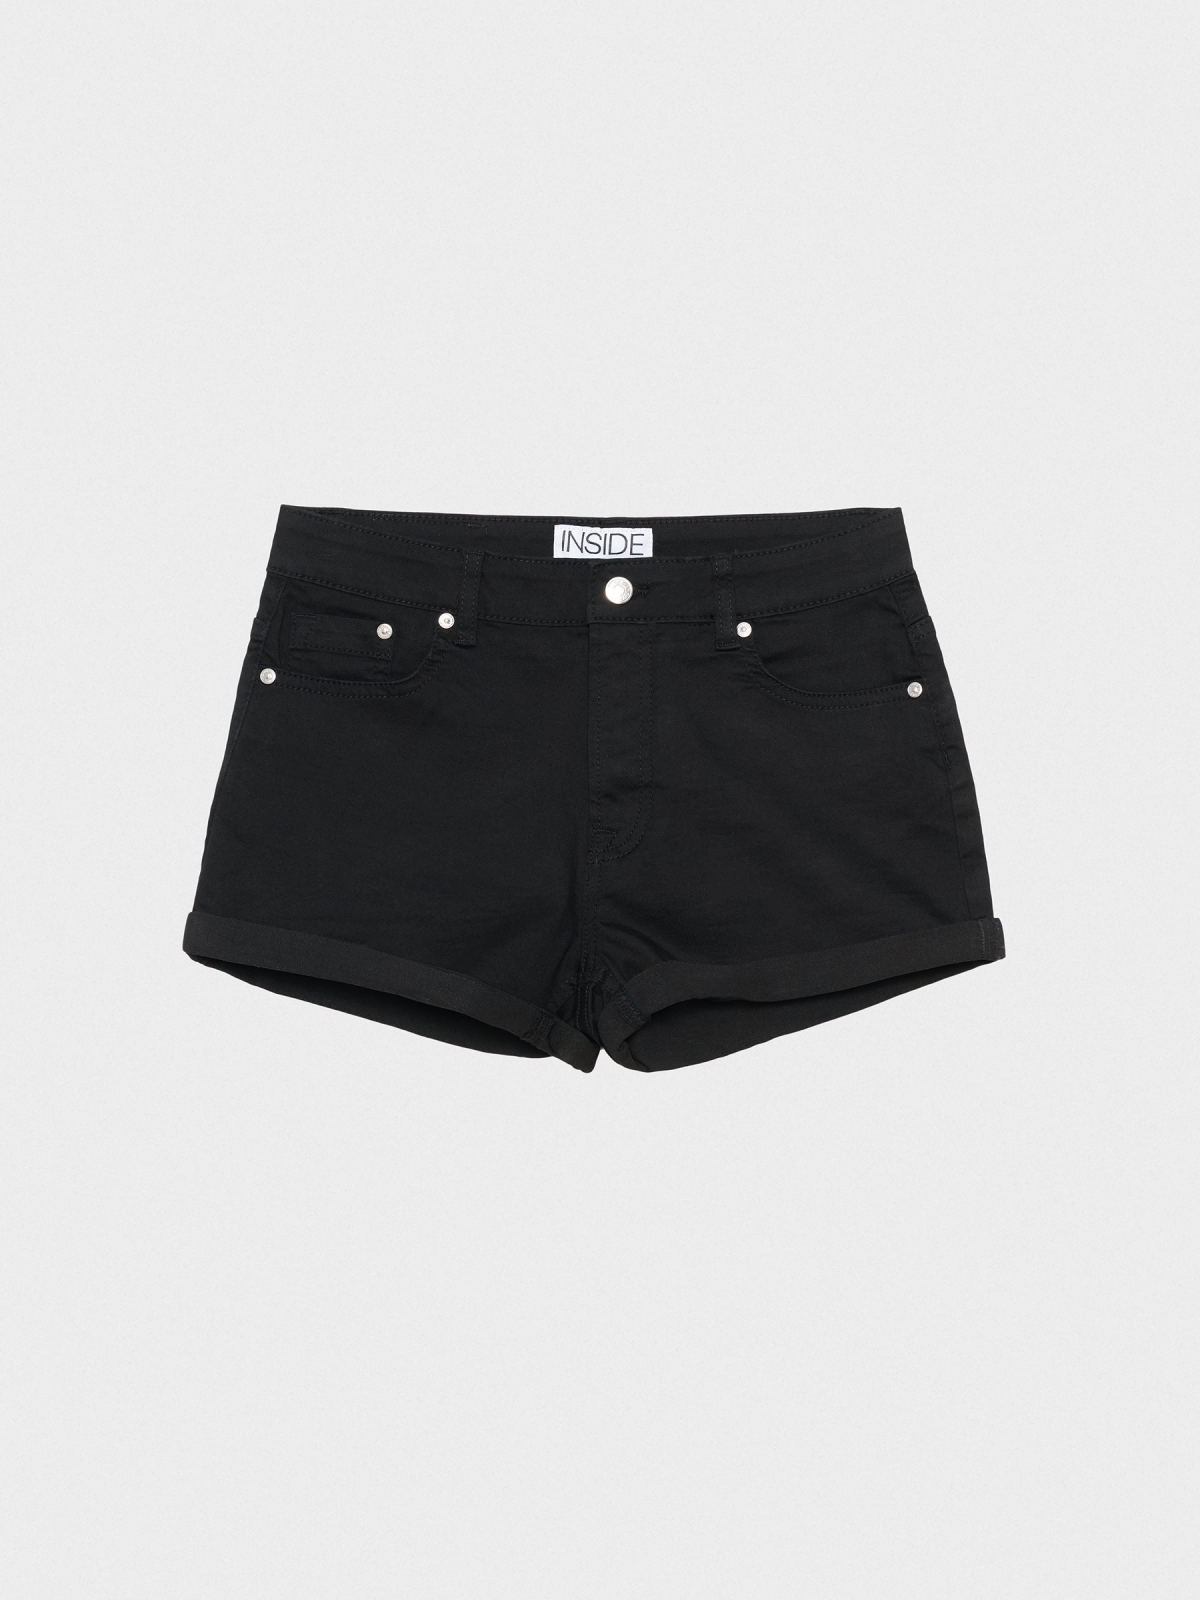  Shorts de sarja coloridos preto